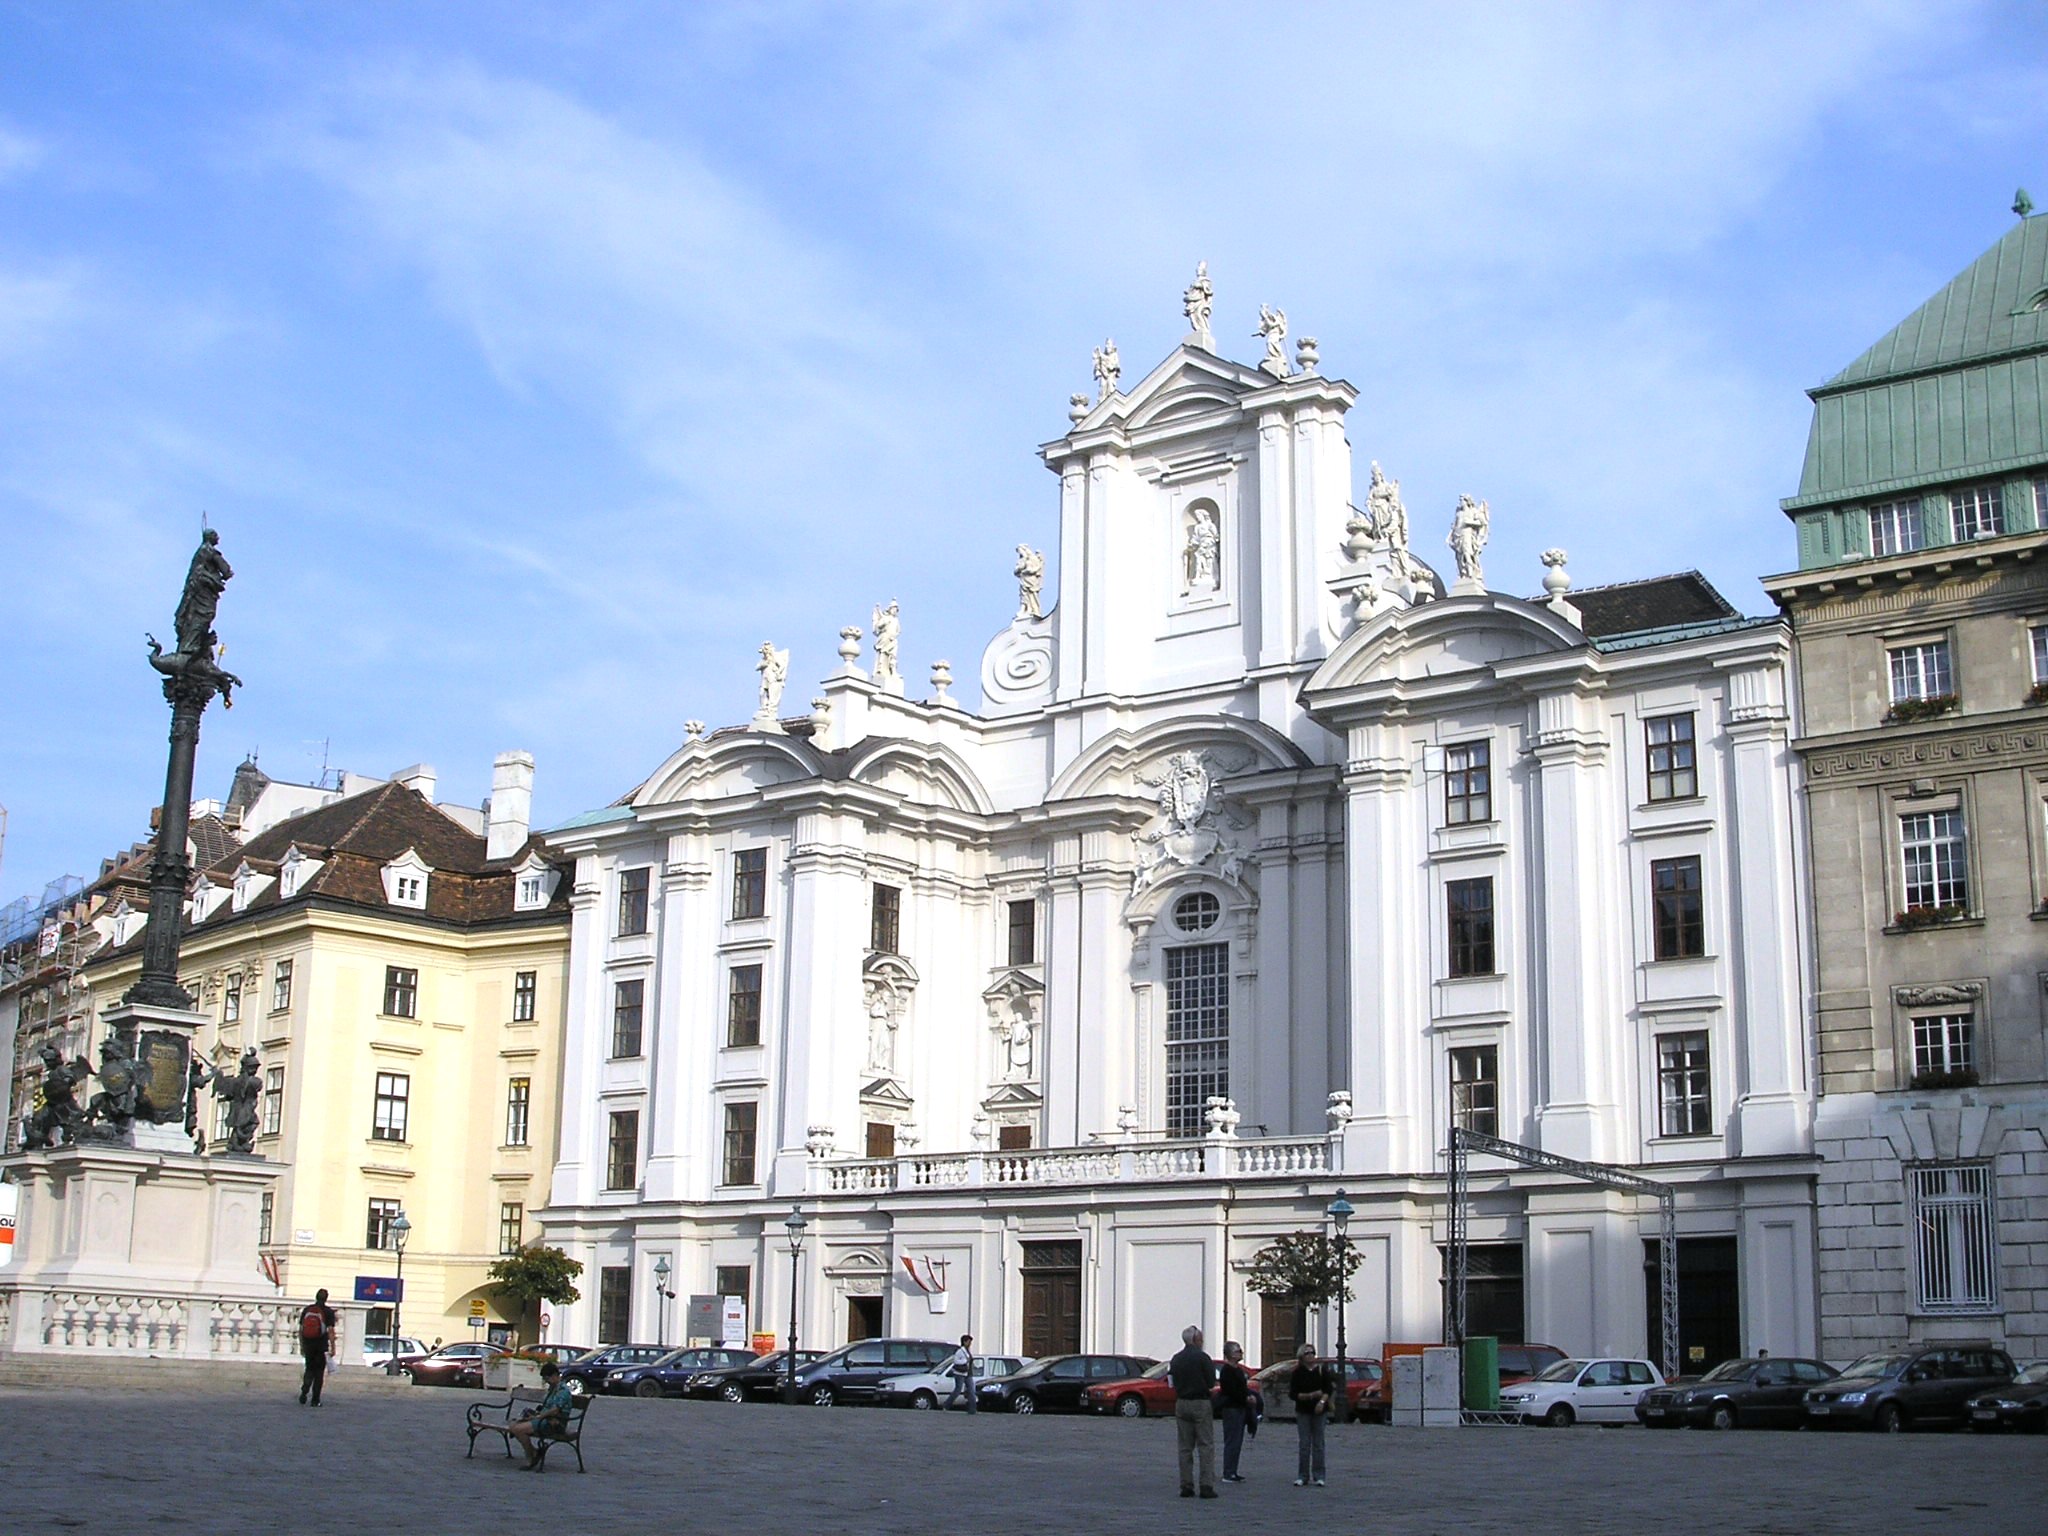 ... File:Kirche Am Hof Vienna Sept 2006 012.jpg - Wikimedia Commons ...